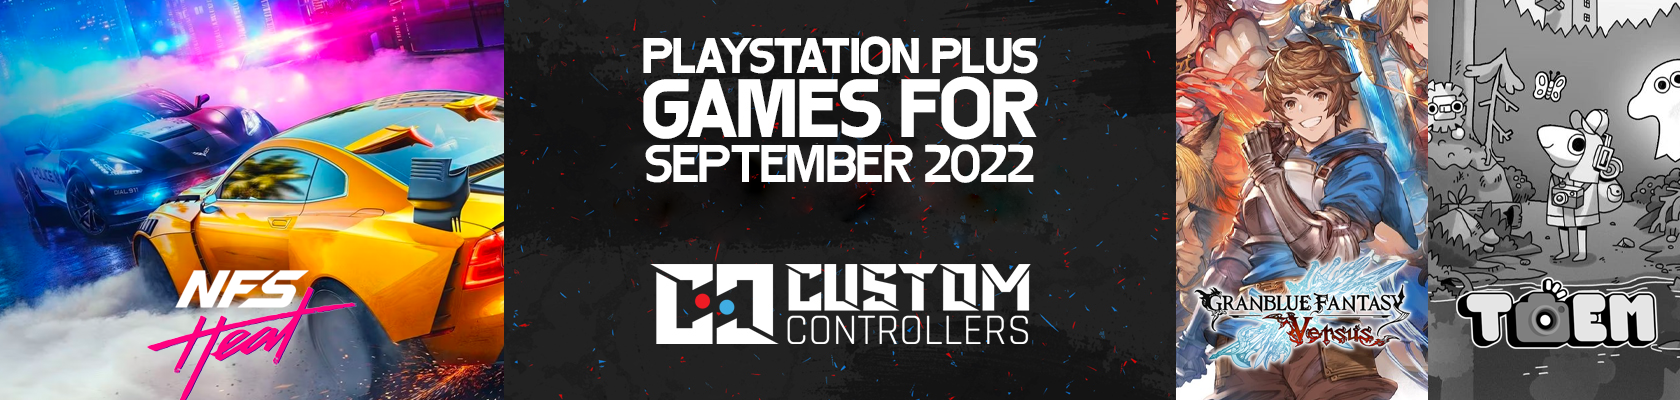 PS Plus Games September 2022-Custom Controllers UK